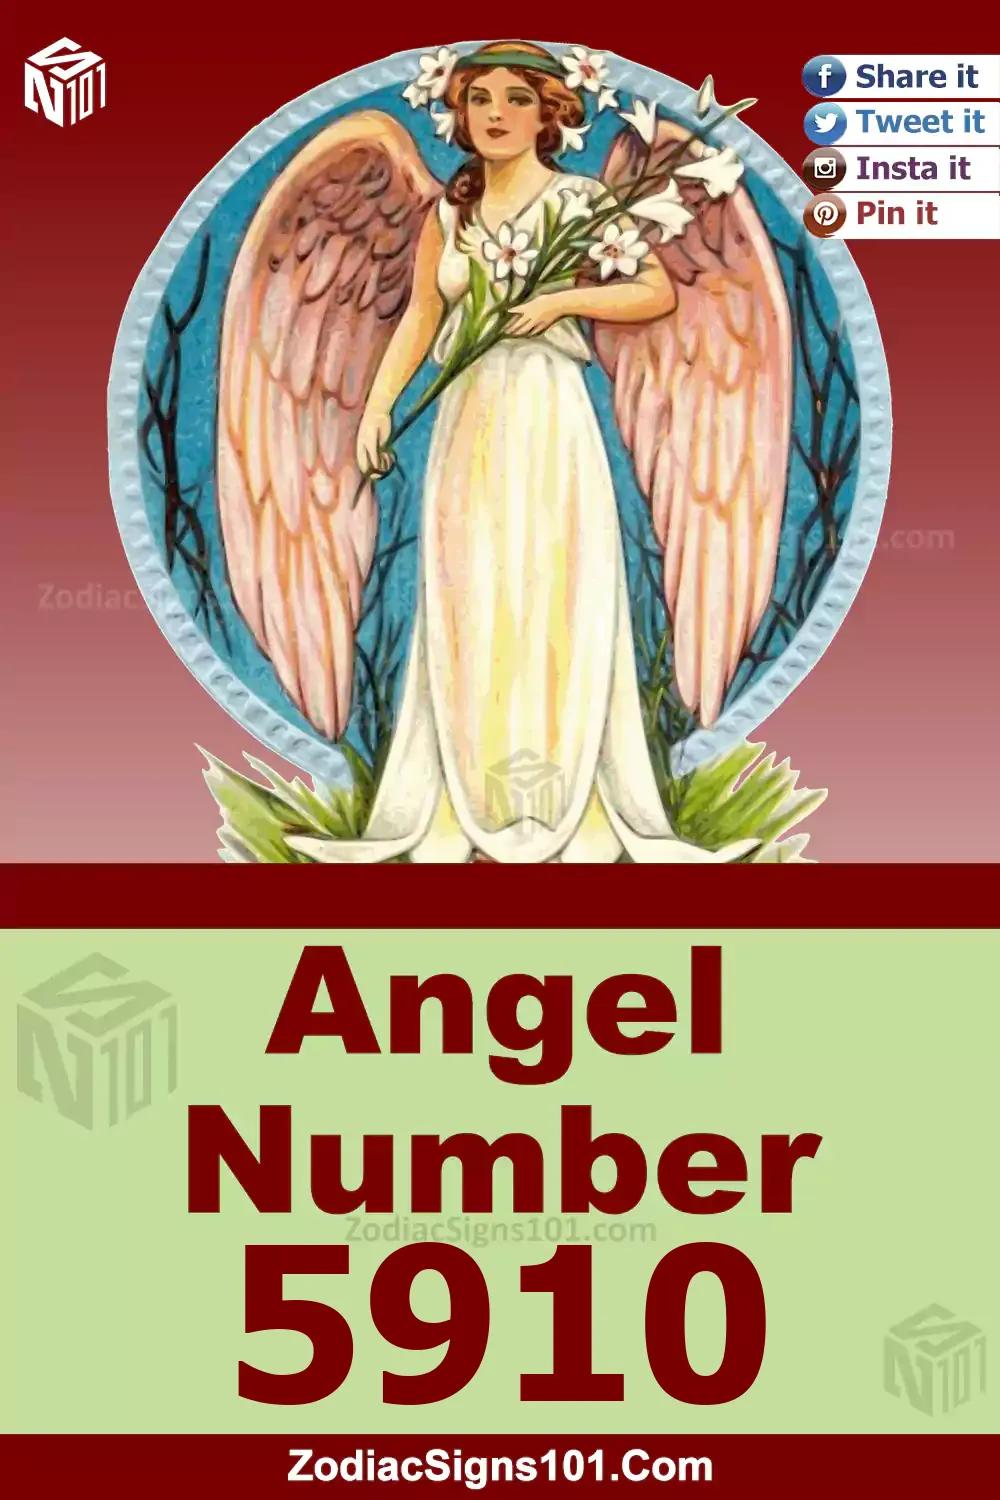 5910-Angel-Number-Meaning.jpg